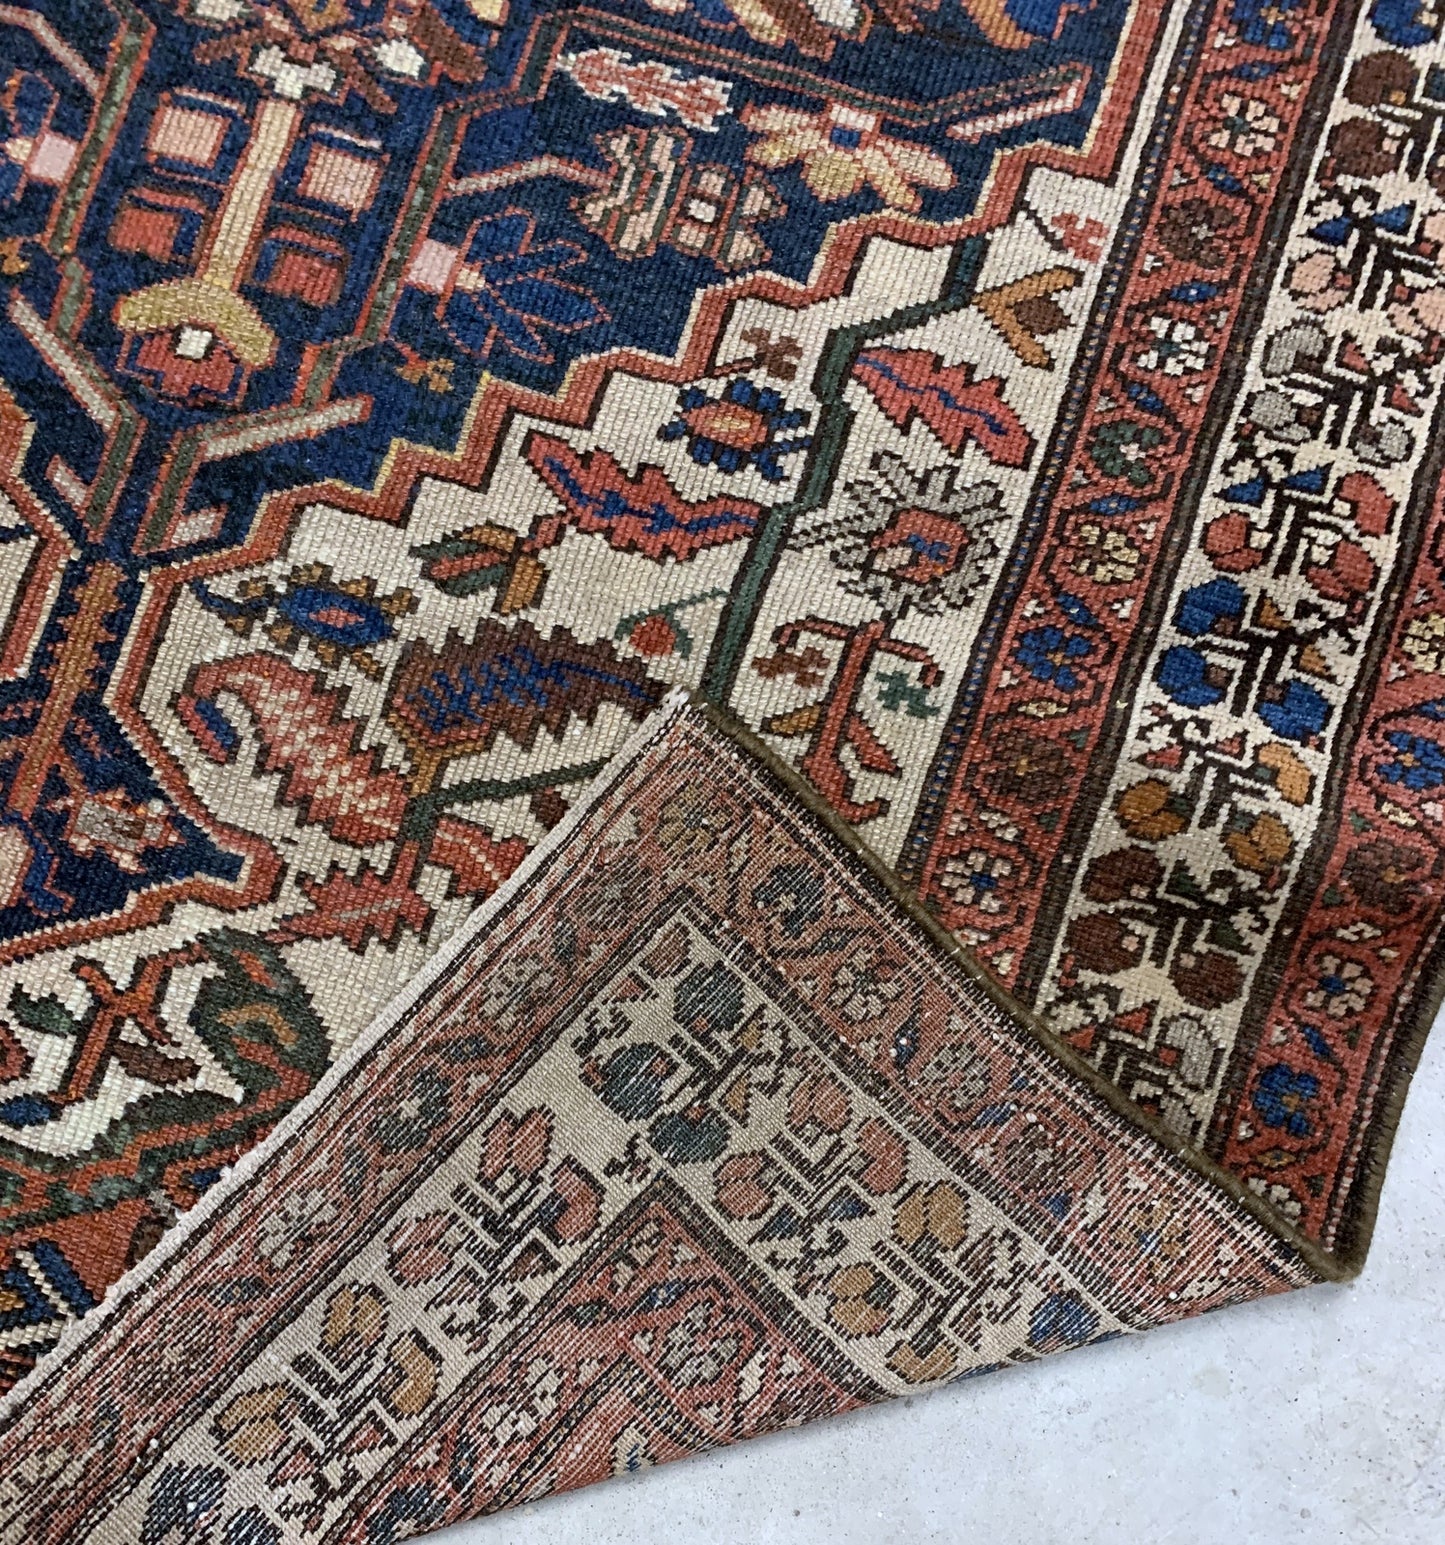 Handmade antique Persian Malayer rug 1920s